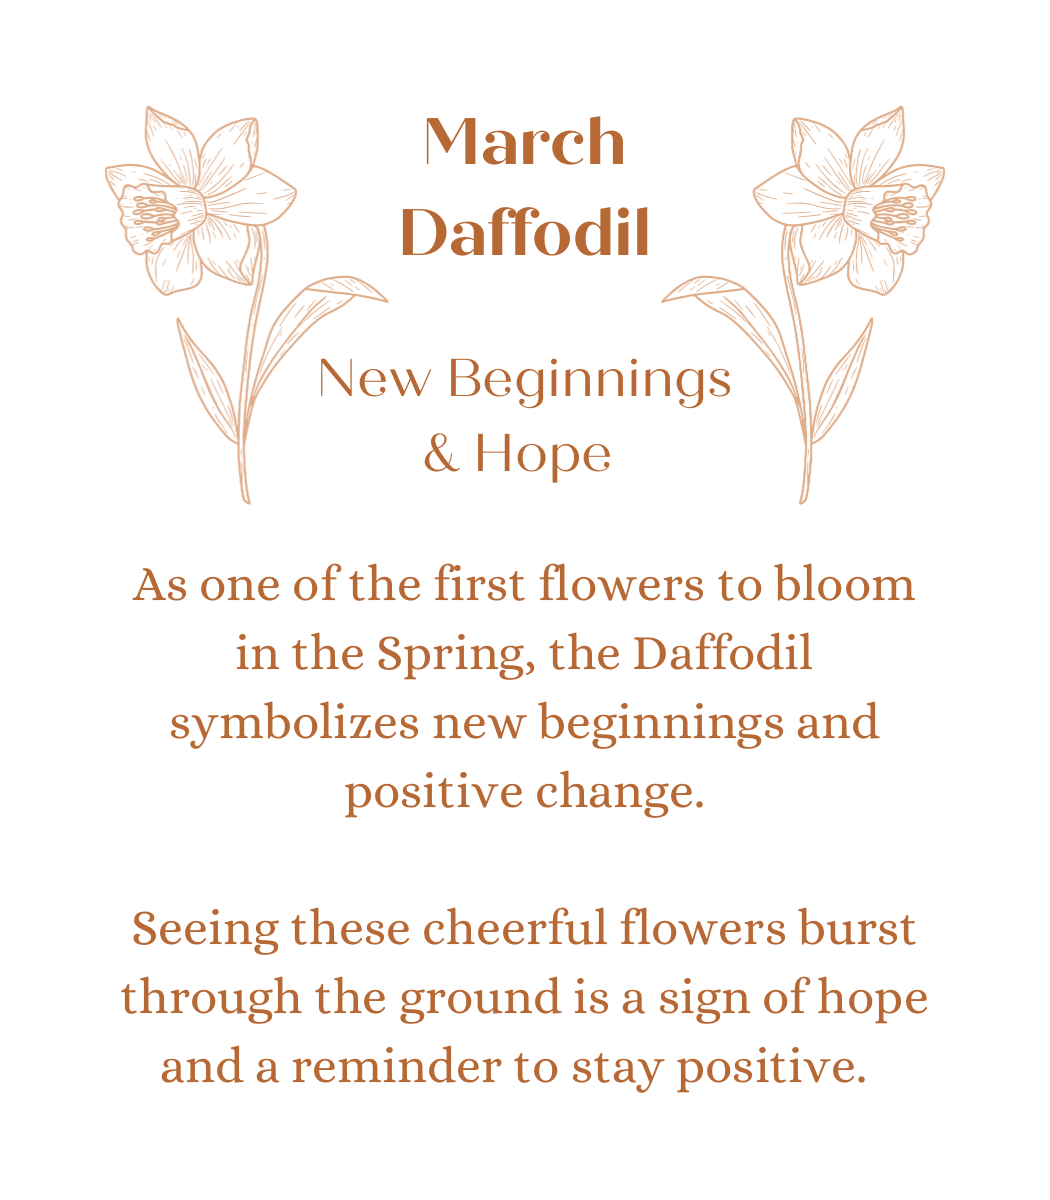 March Daffodils in Hera